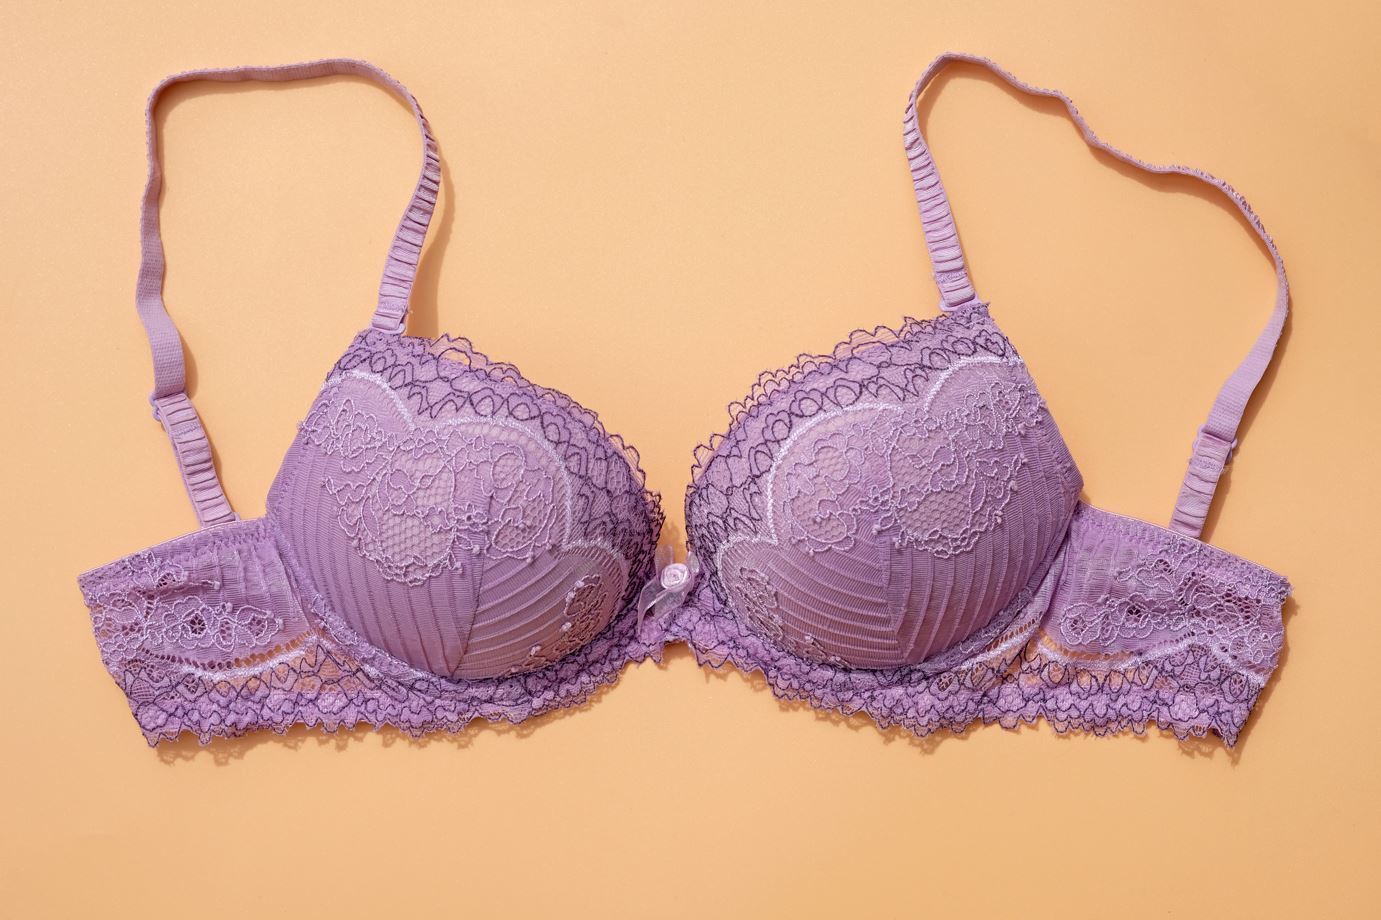 How do bra sizes work? : r/ask